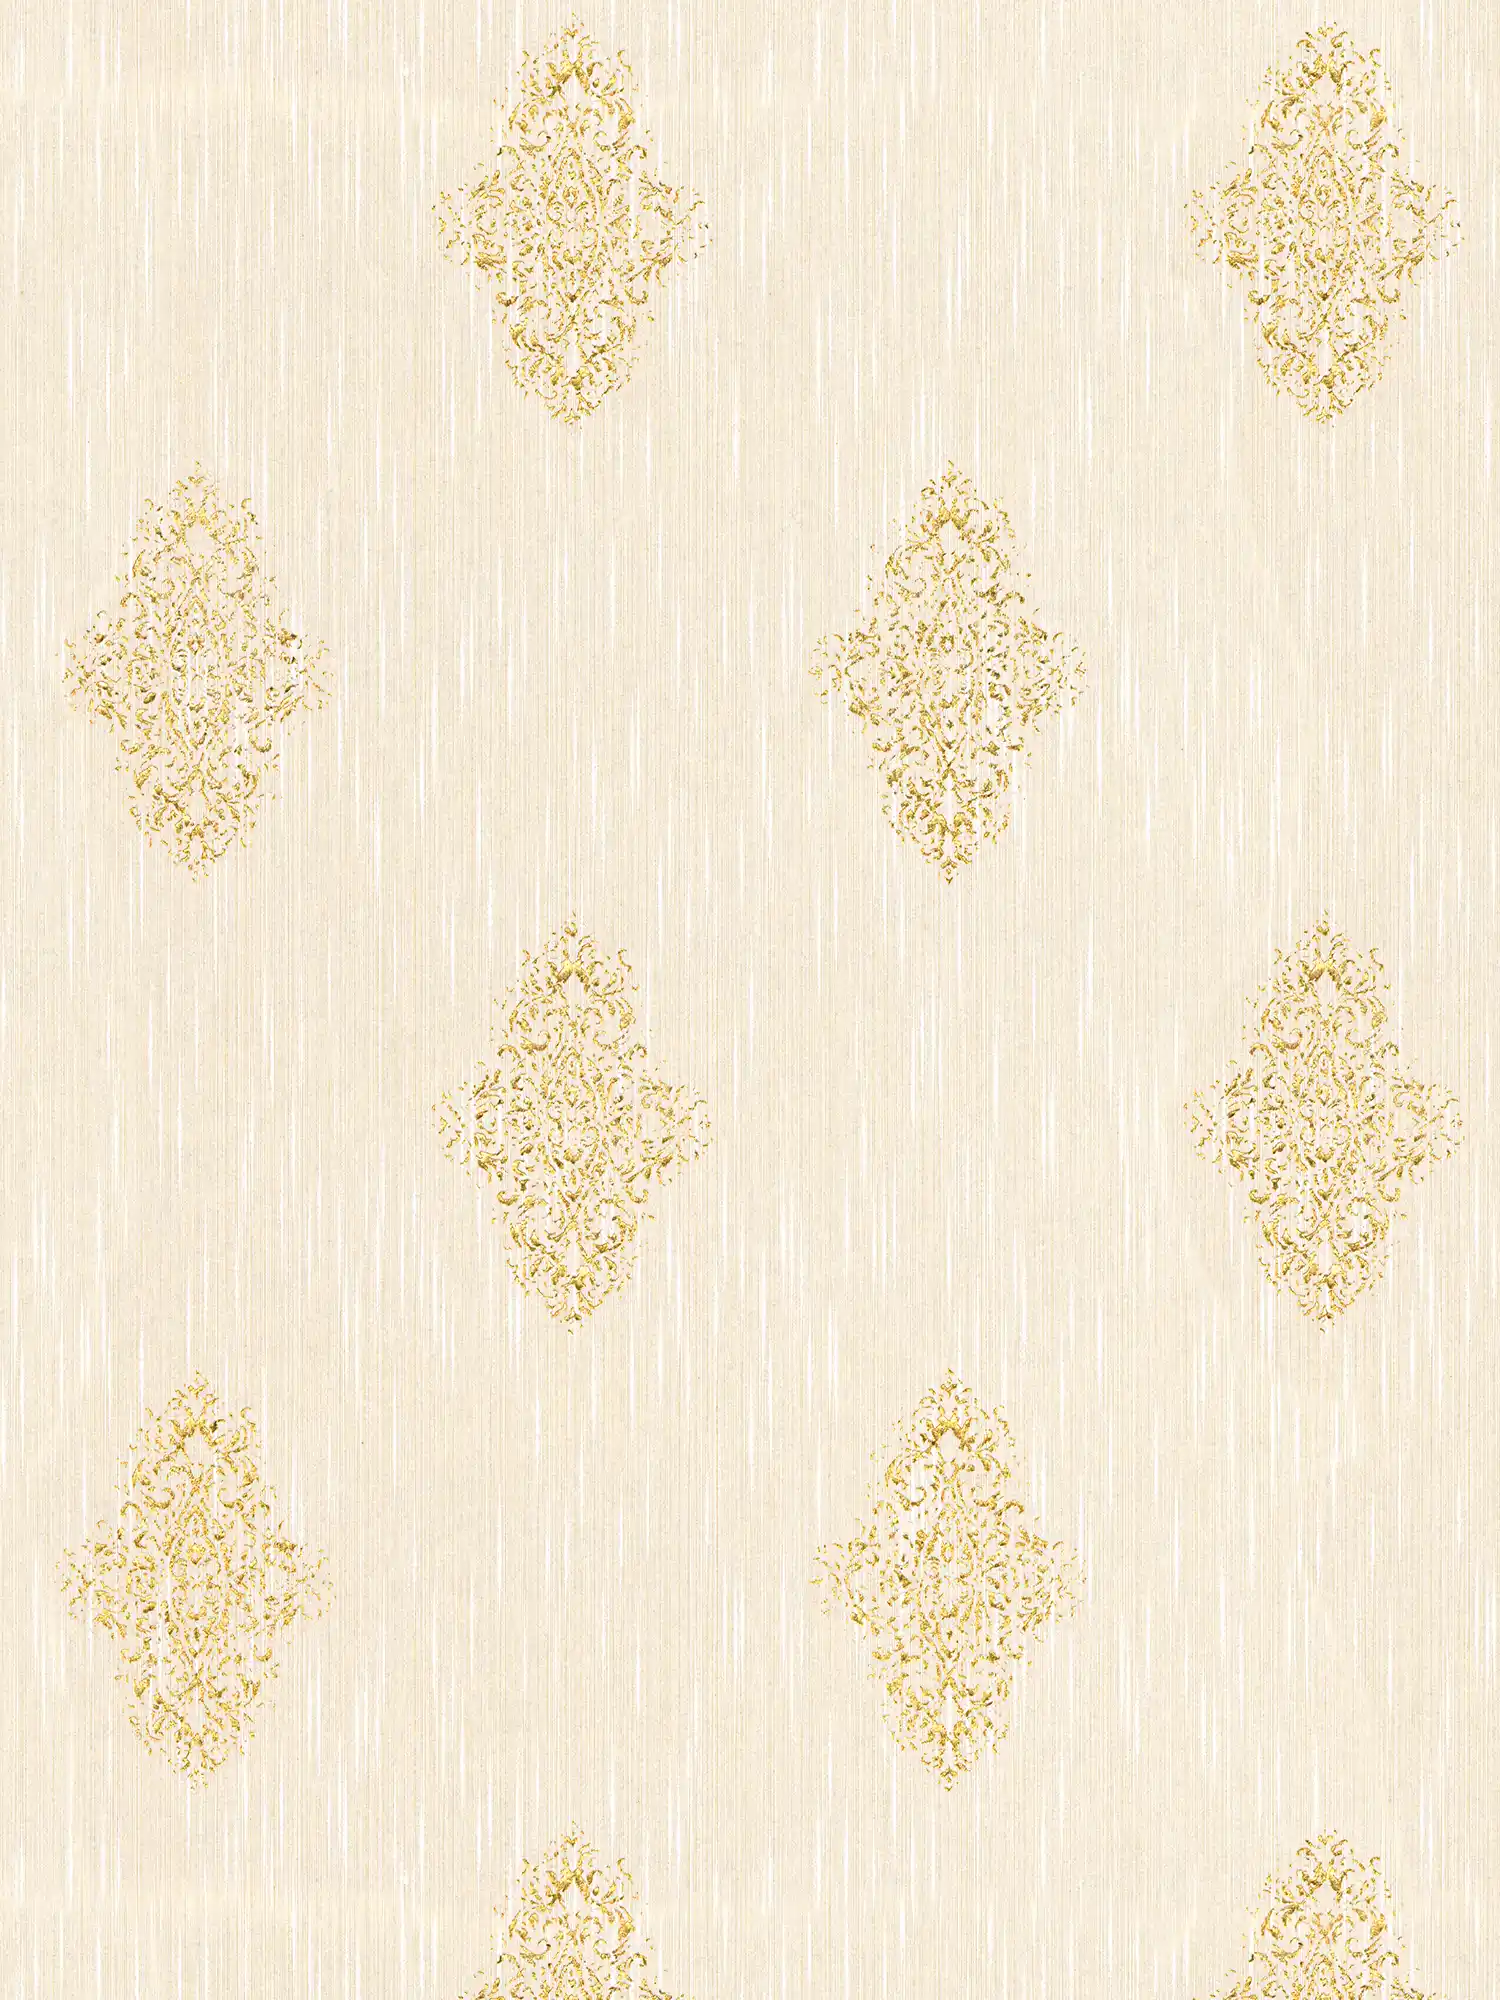 Wallpaper ornament design in used look, metallic effect - cream, gold
